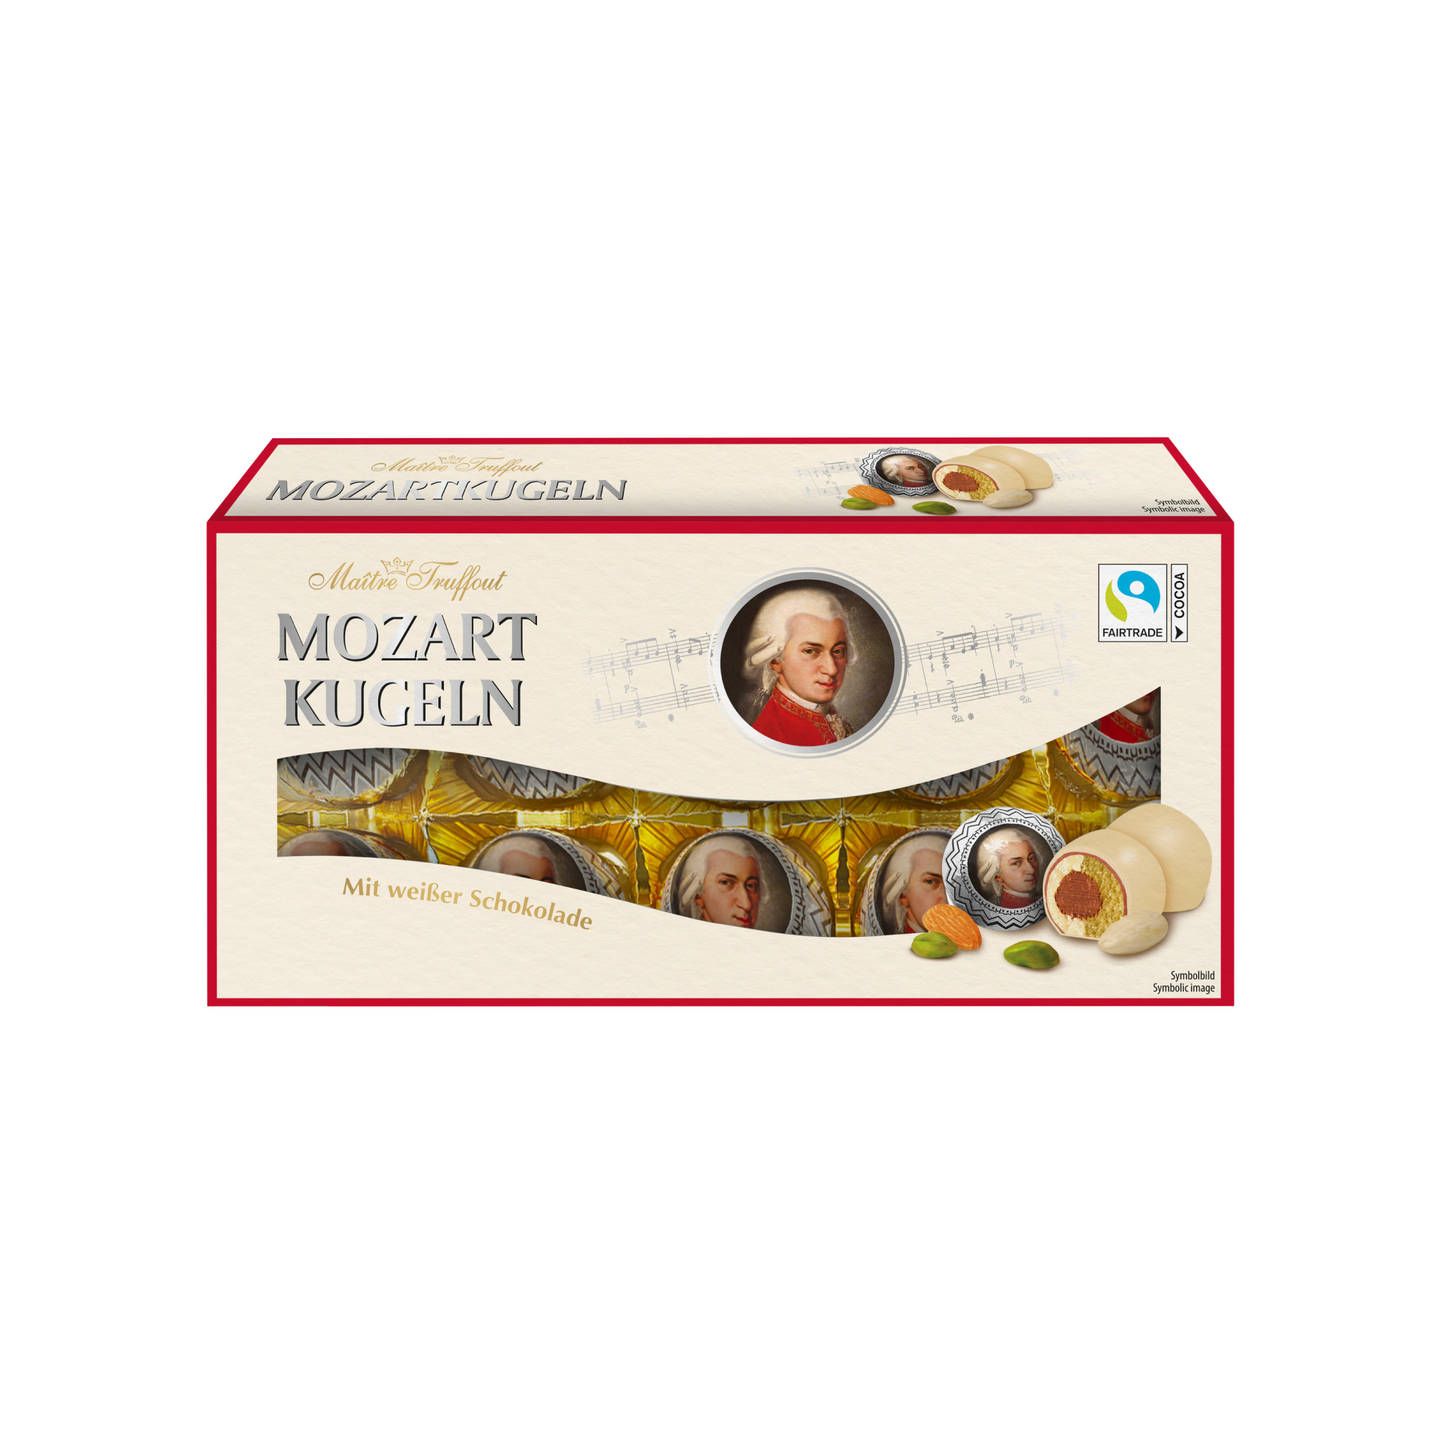 Maître Truffout White Chocolate Mozart Kugeln 200g